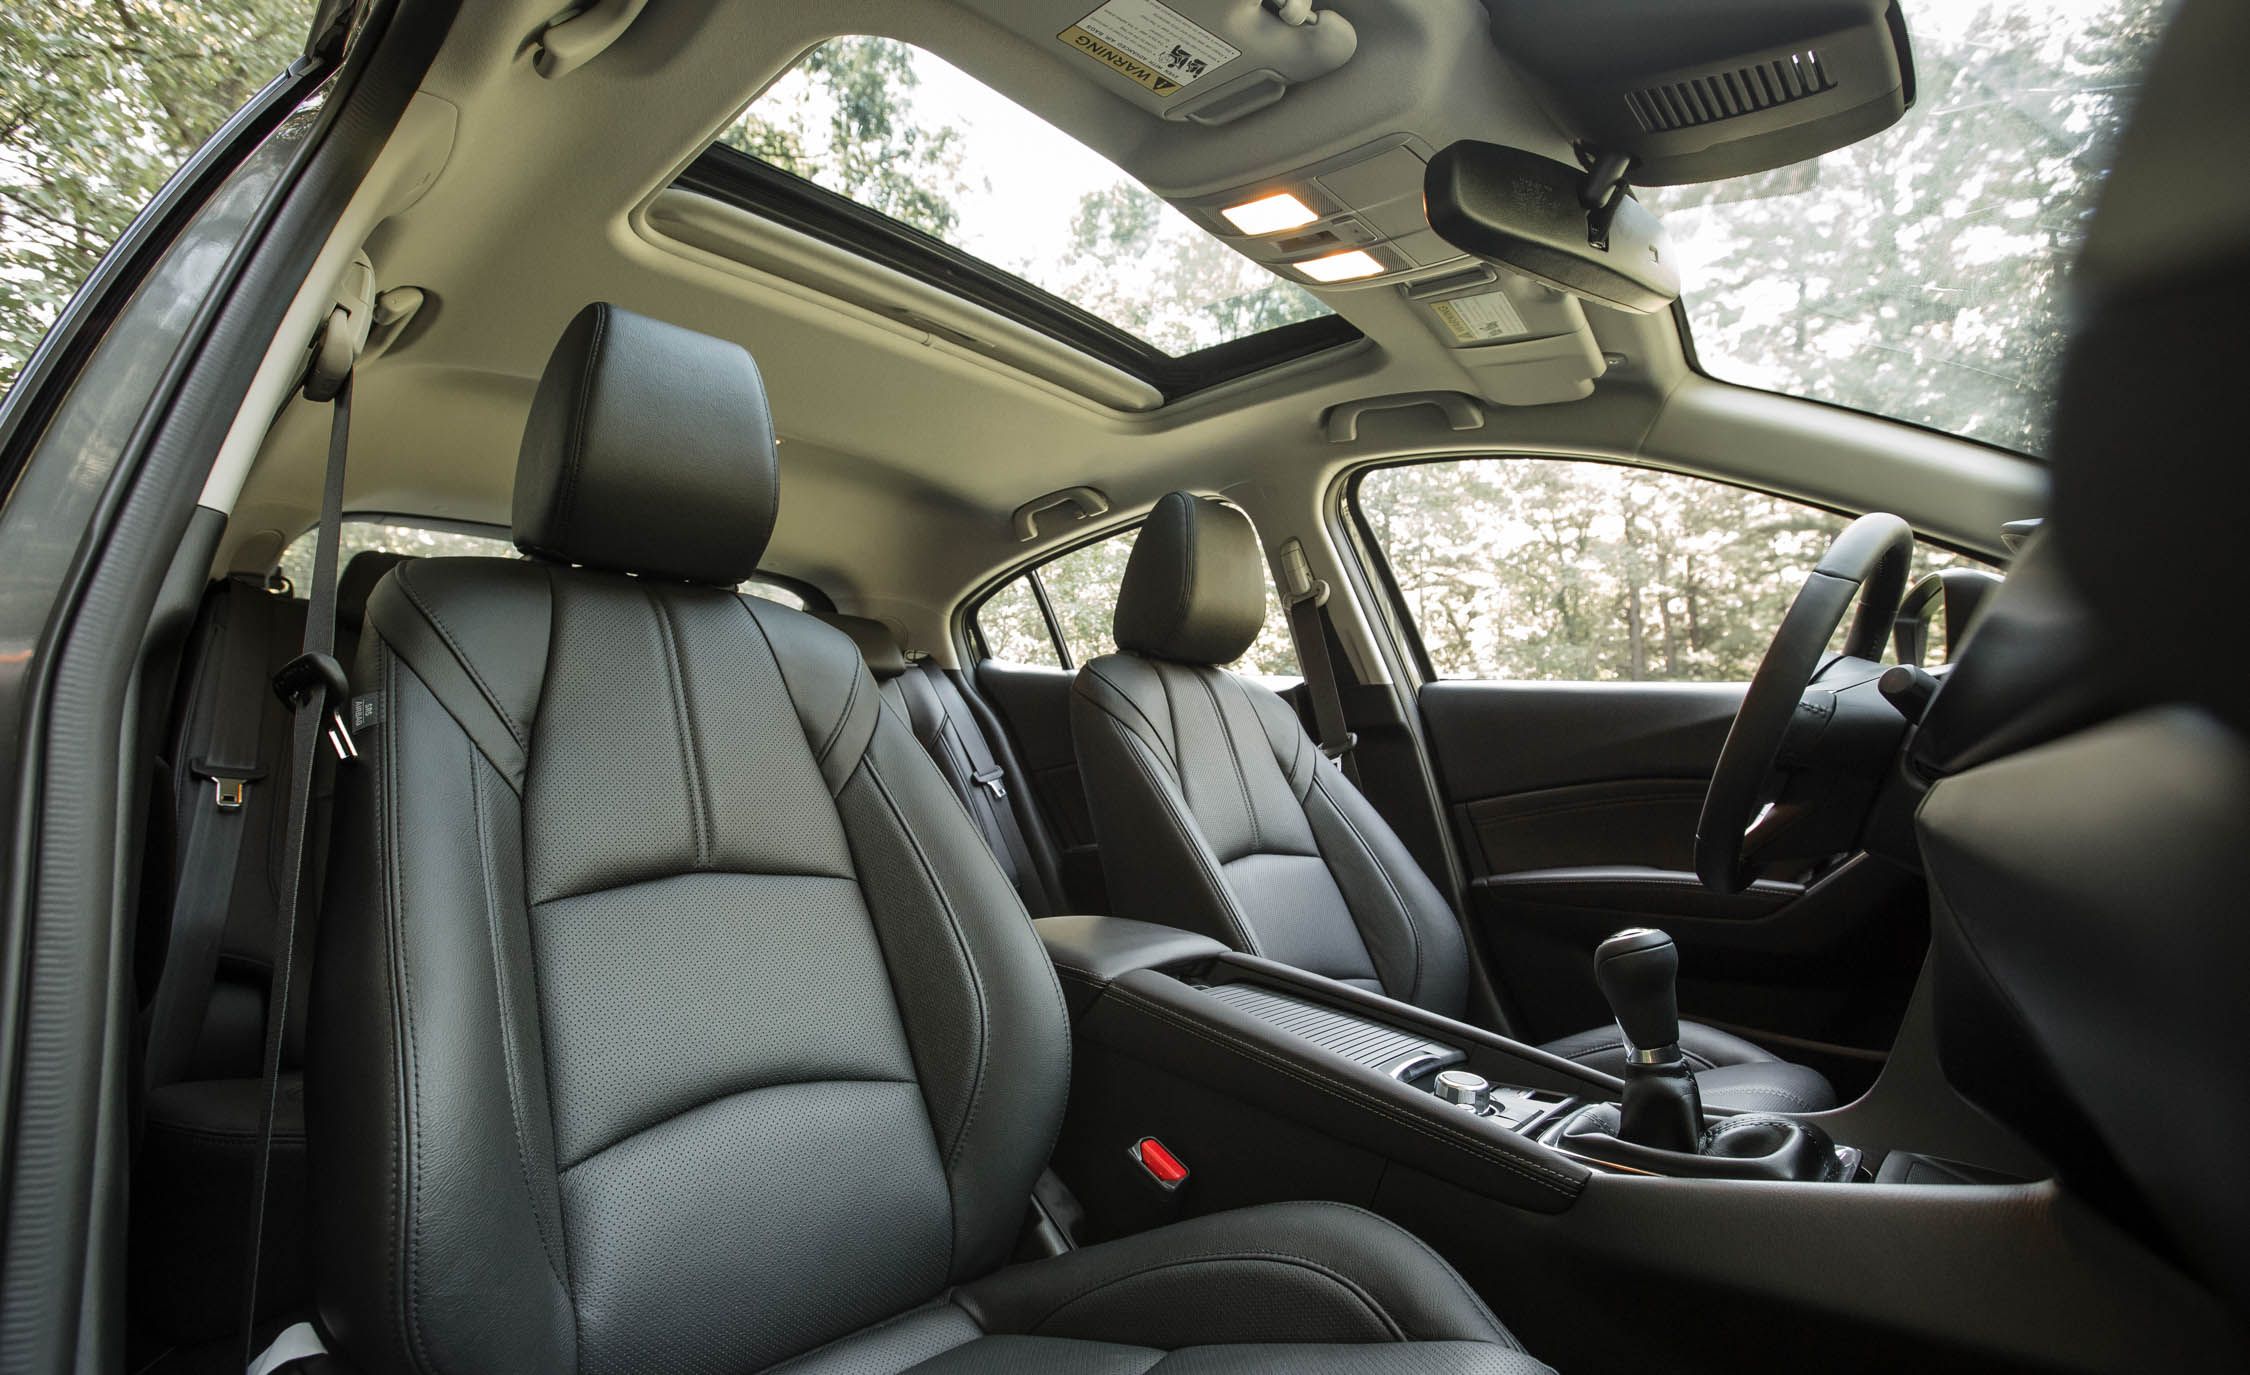 2017 Mazda3 Hatchback Interior Seats Front (View 35 of 40)